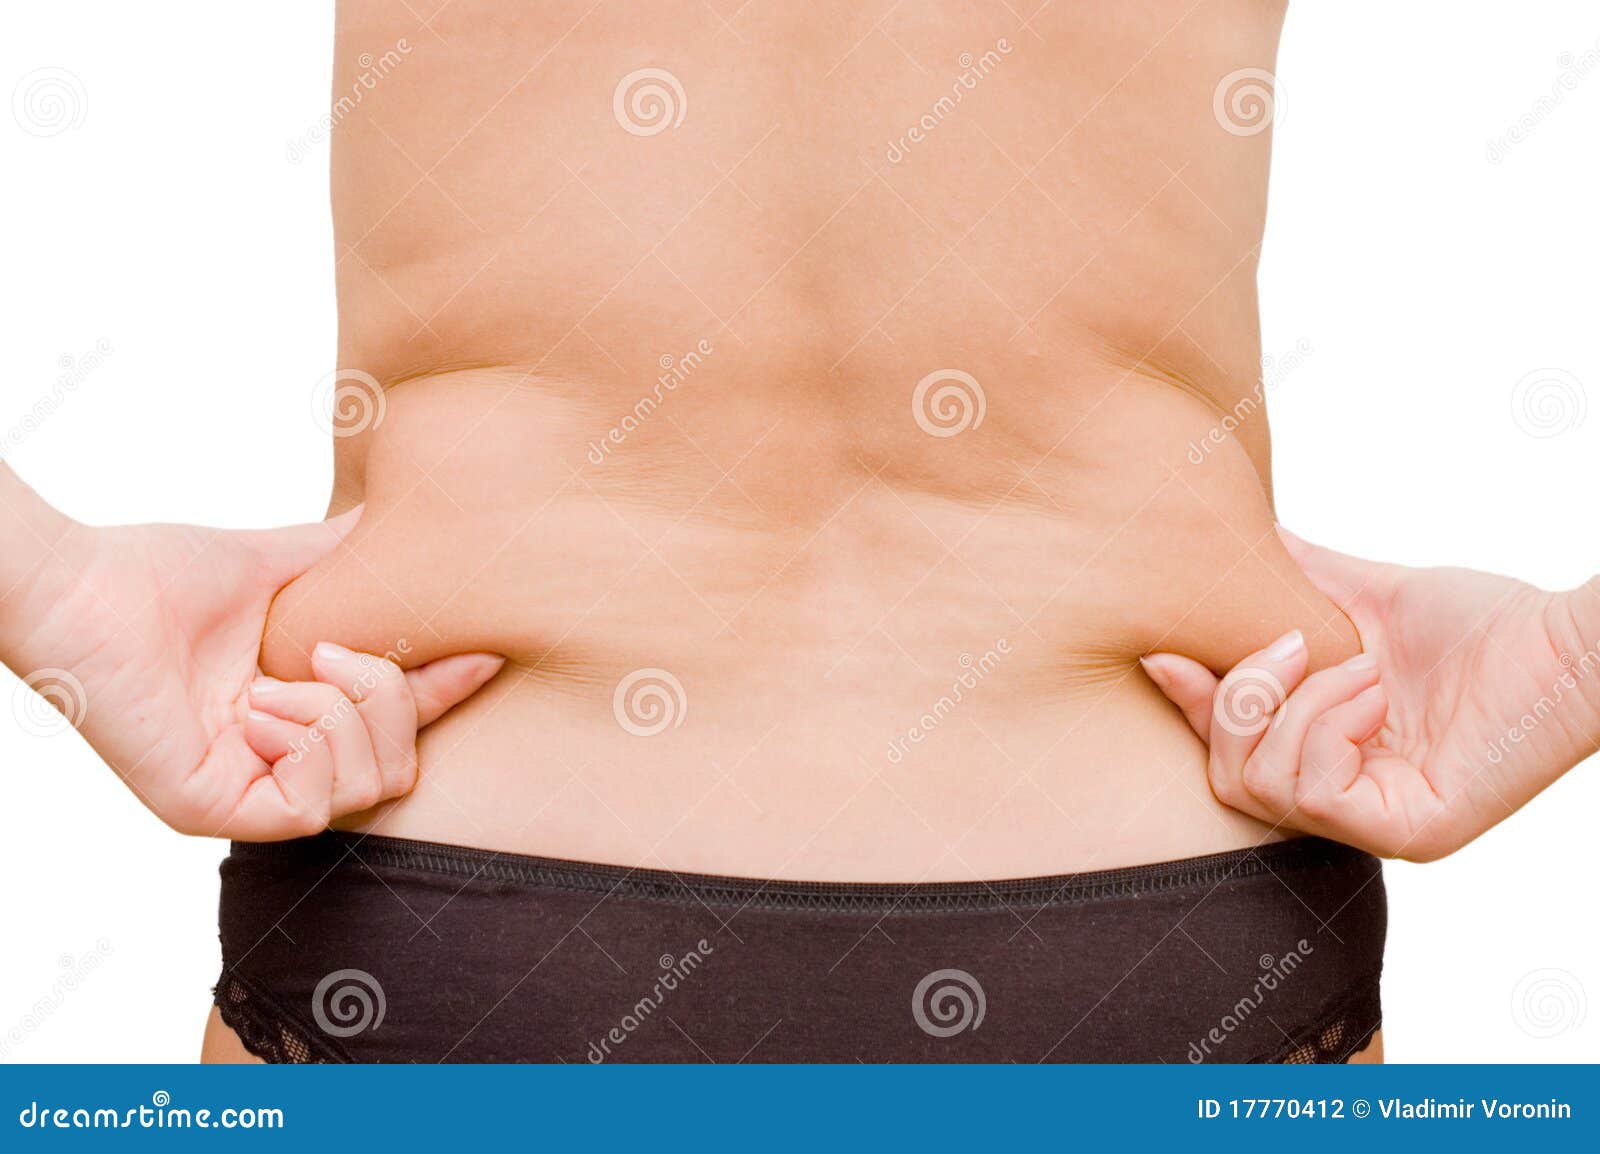 cellulitis on stomach #9